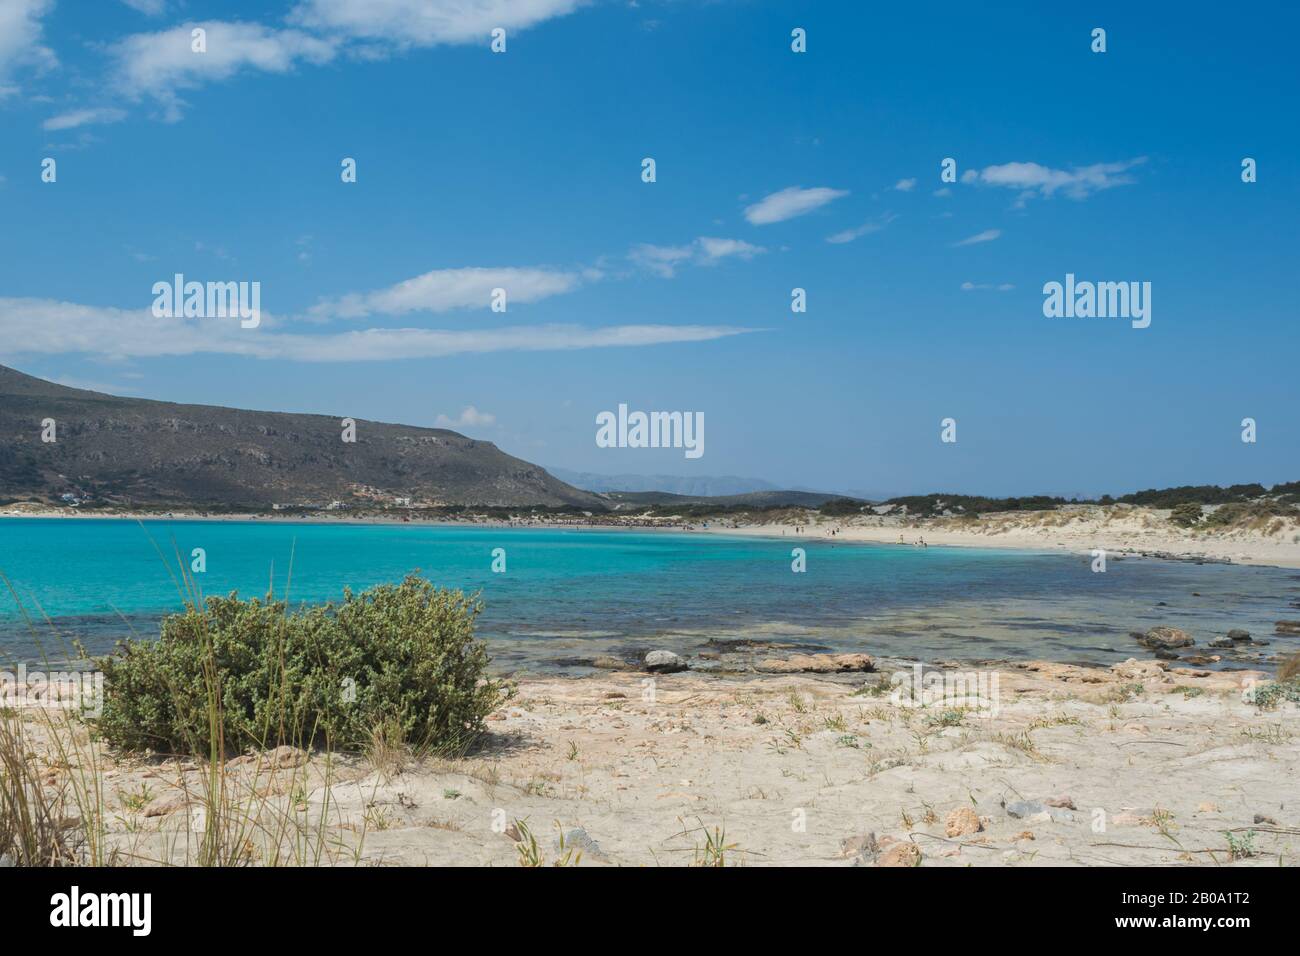 Beautiful beach with teal blue waters shot at Elafonhsos Island, Greece. Stock Photo